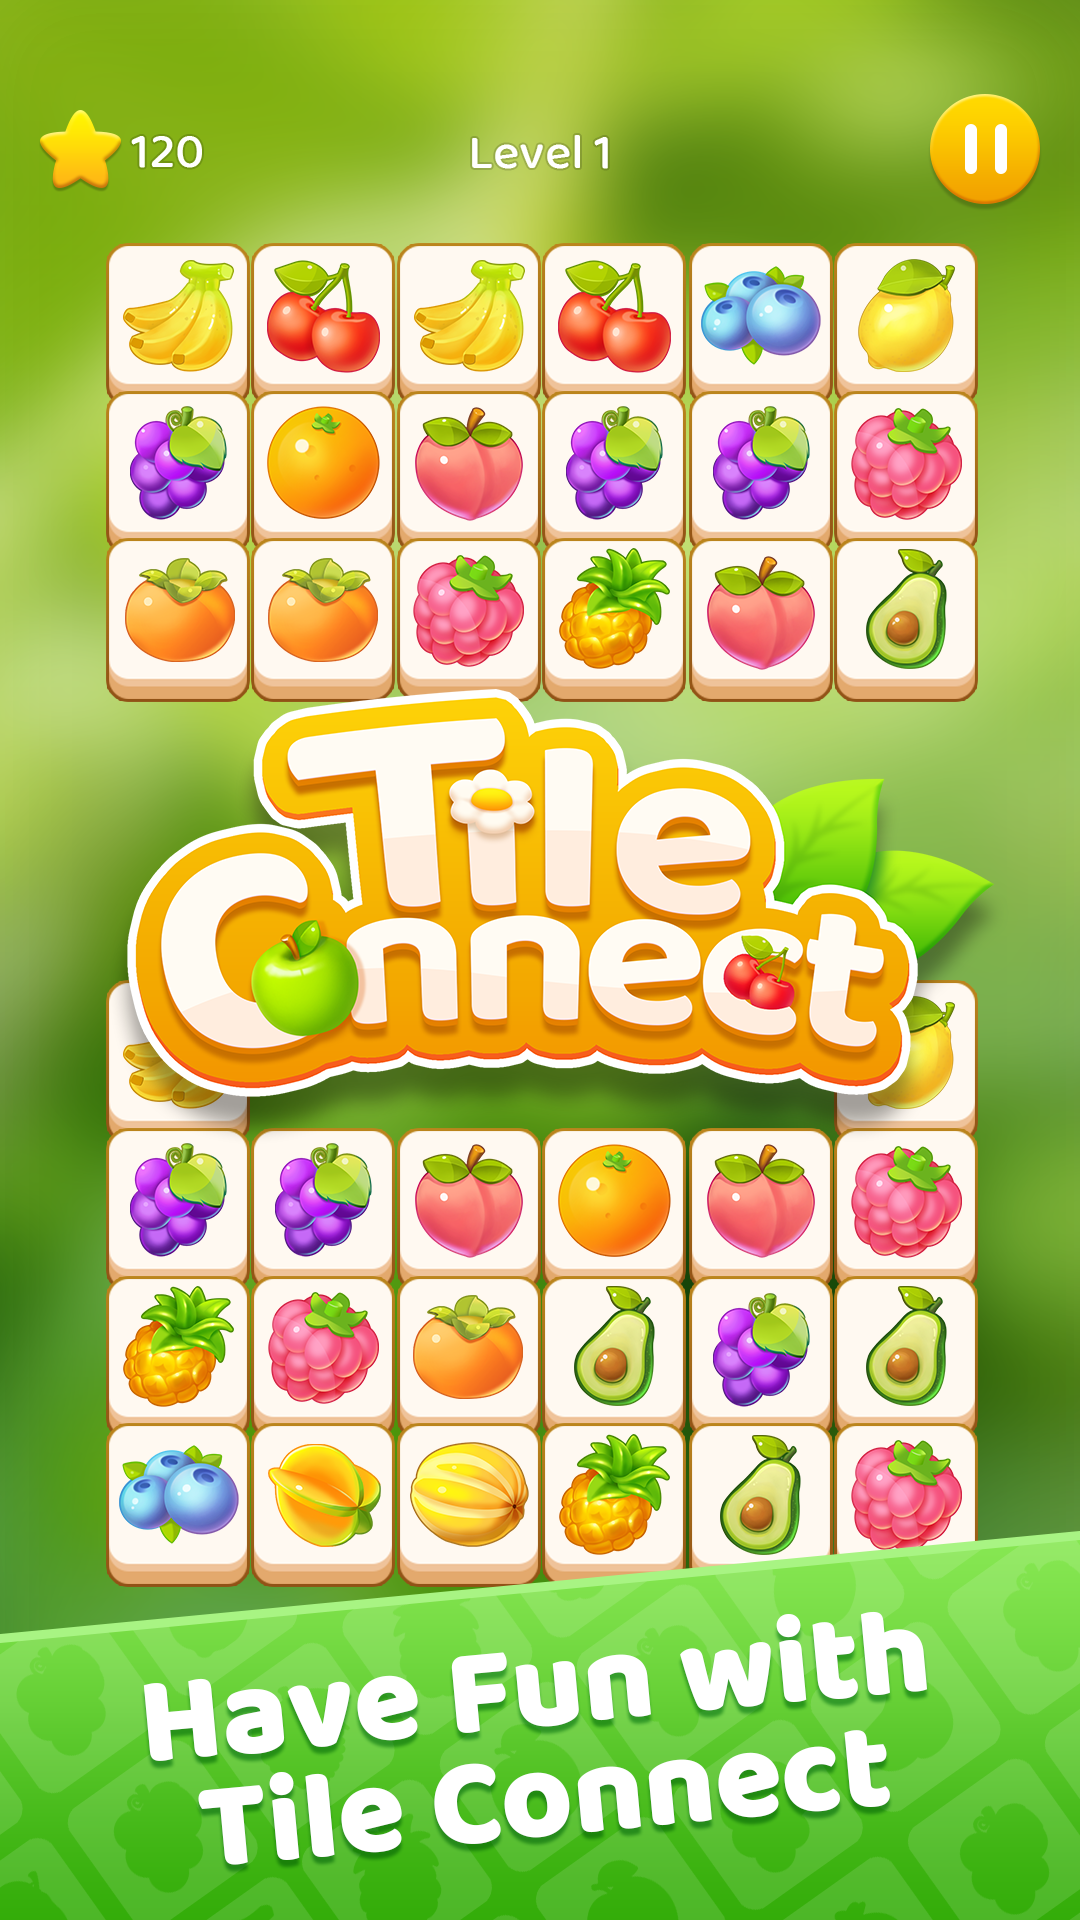 Screenshot 1 of Tile Connect - Permainan Padanan Jubin 1.5.5